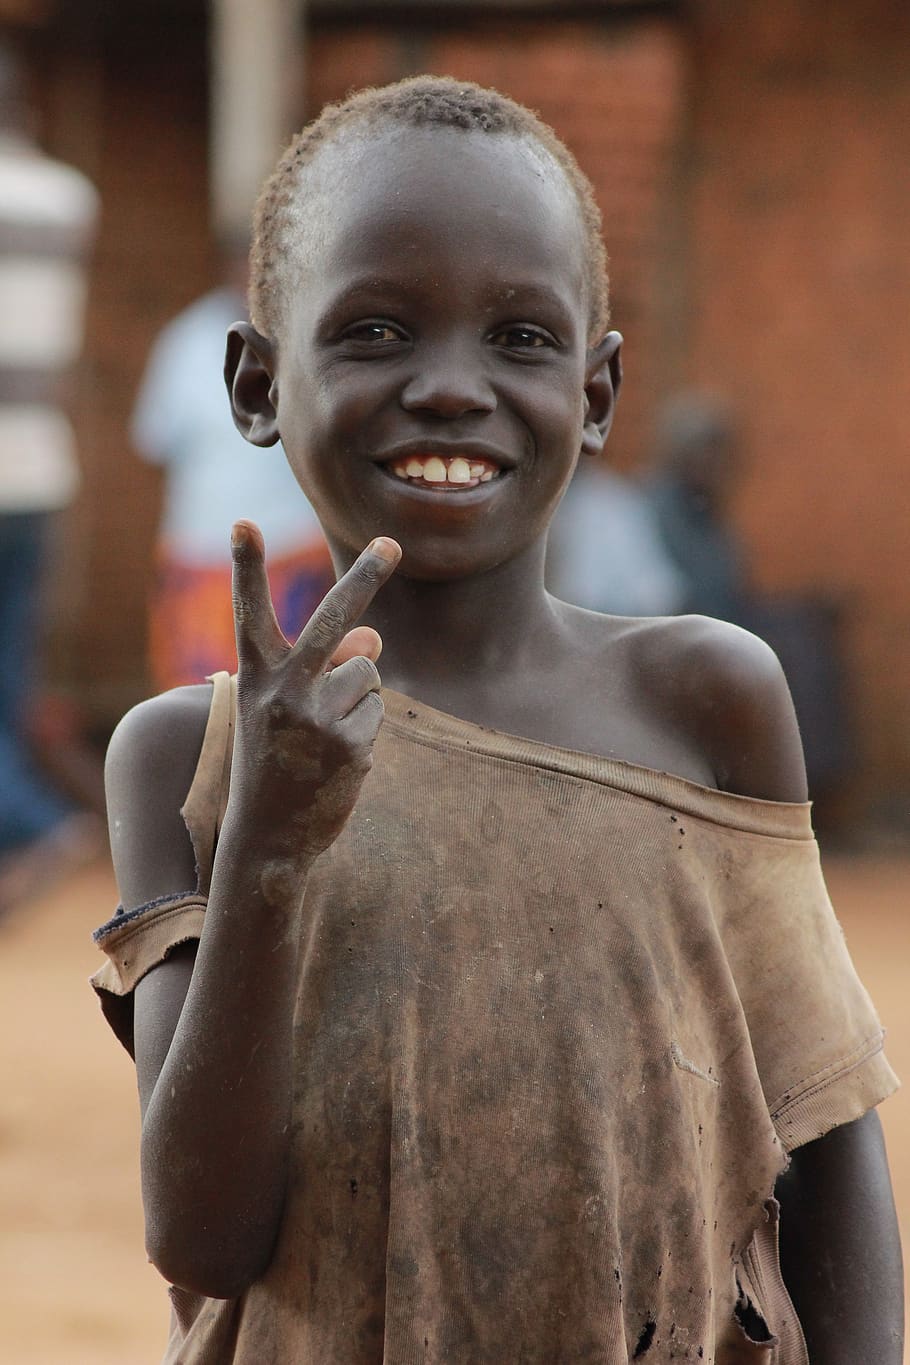 uganda, africa, poverty, young, black, life, child, poor, children